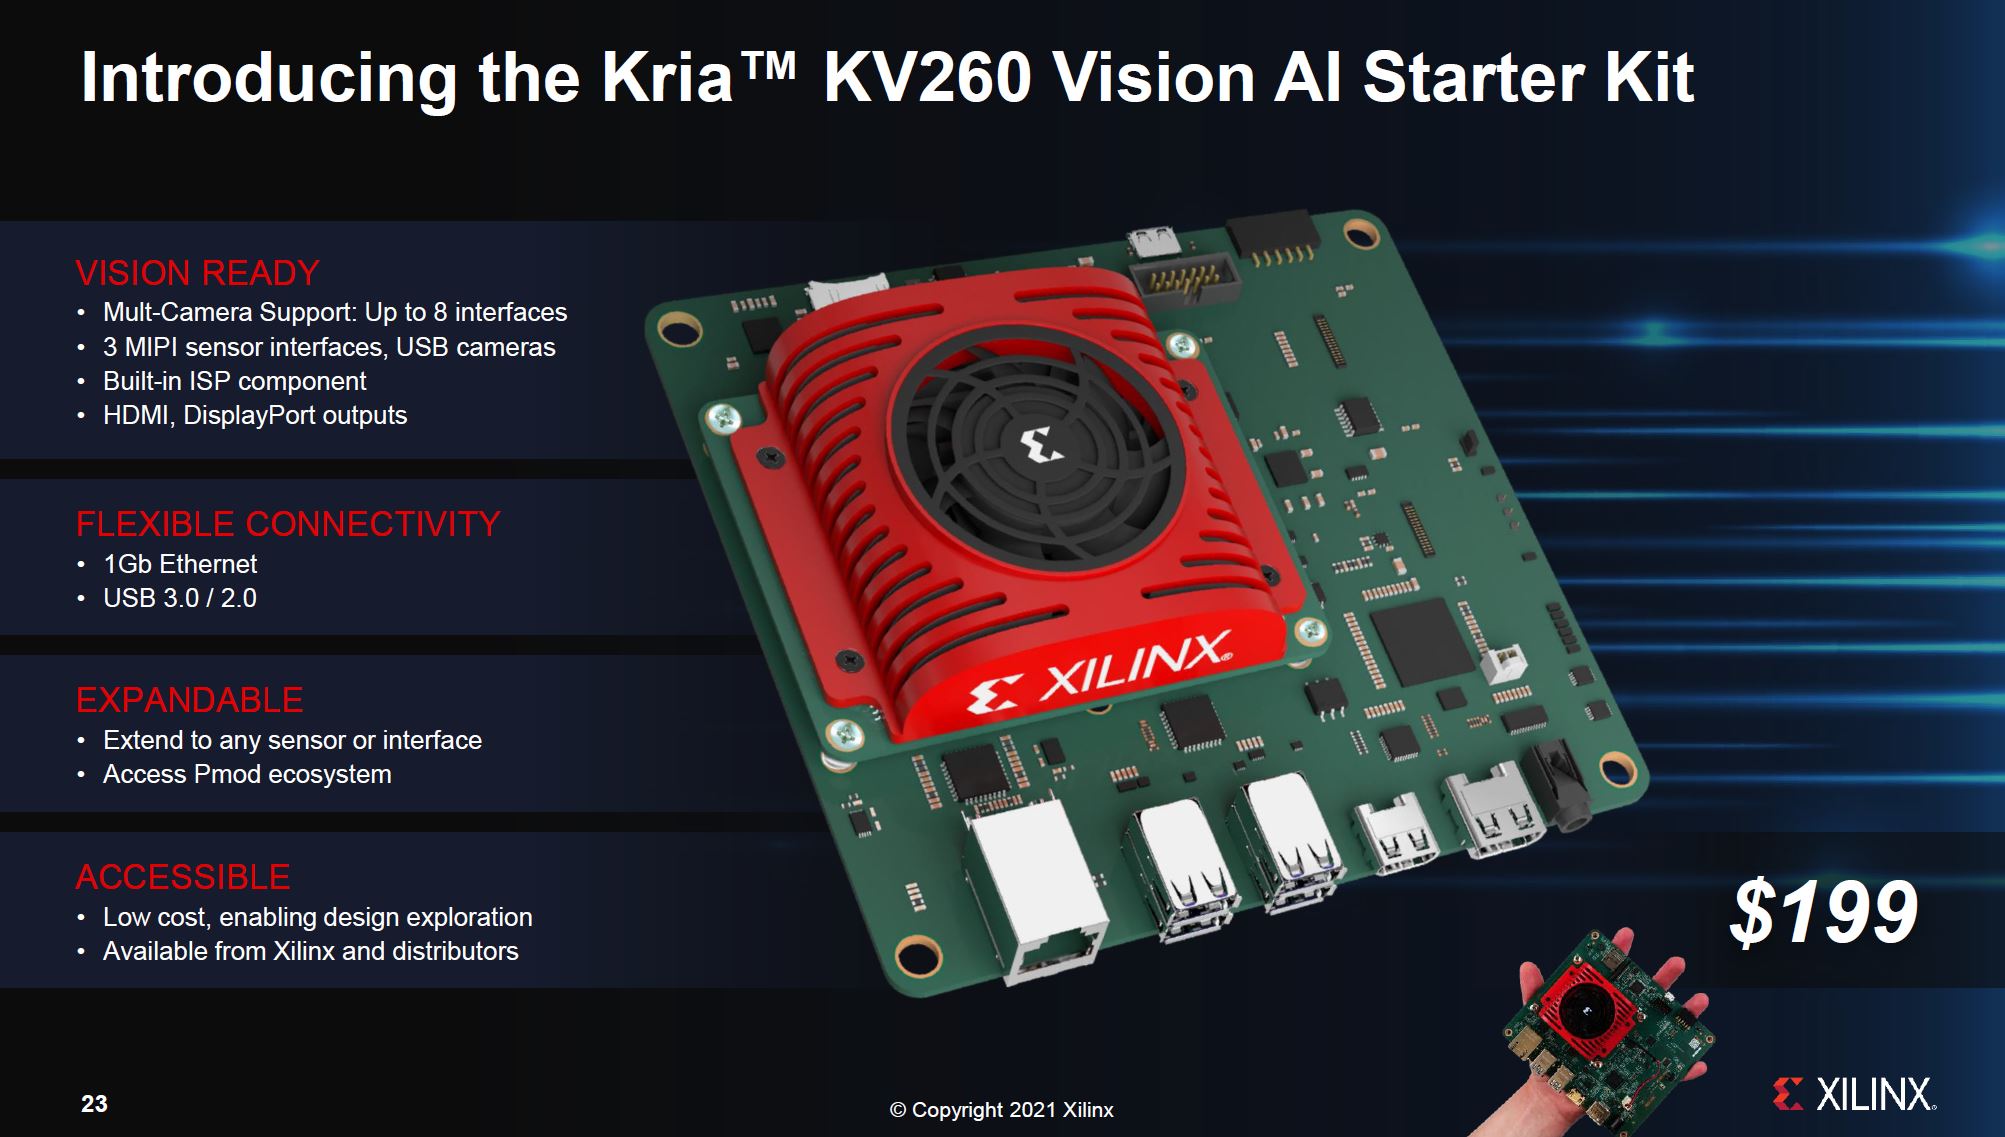 Xilinx Kira KV260 Starter Kit